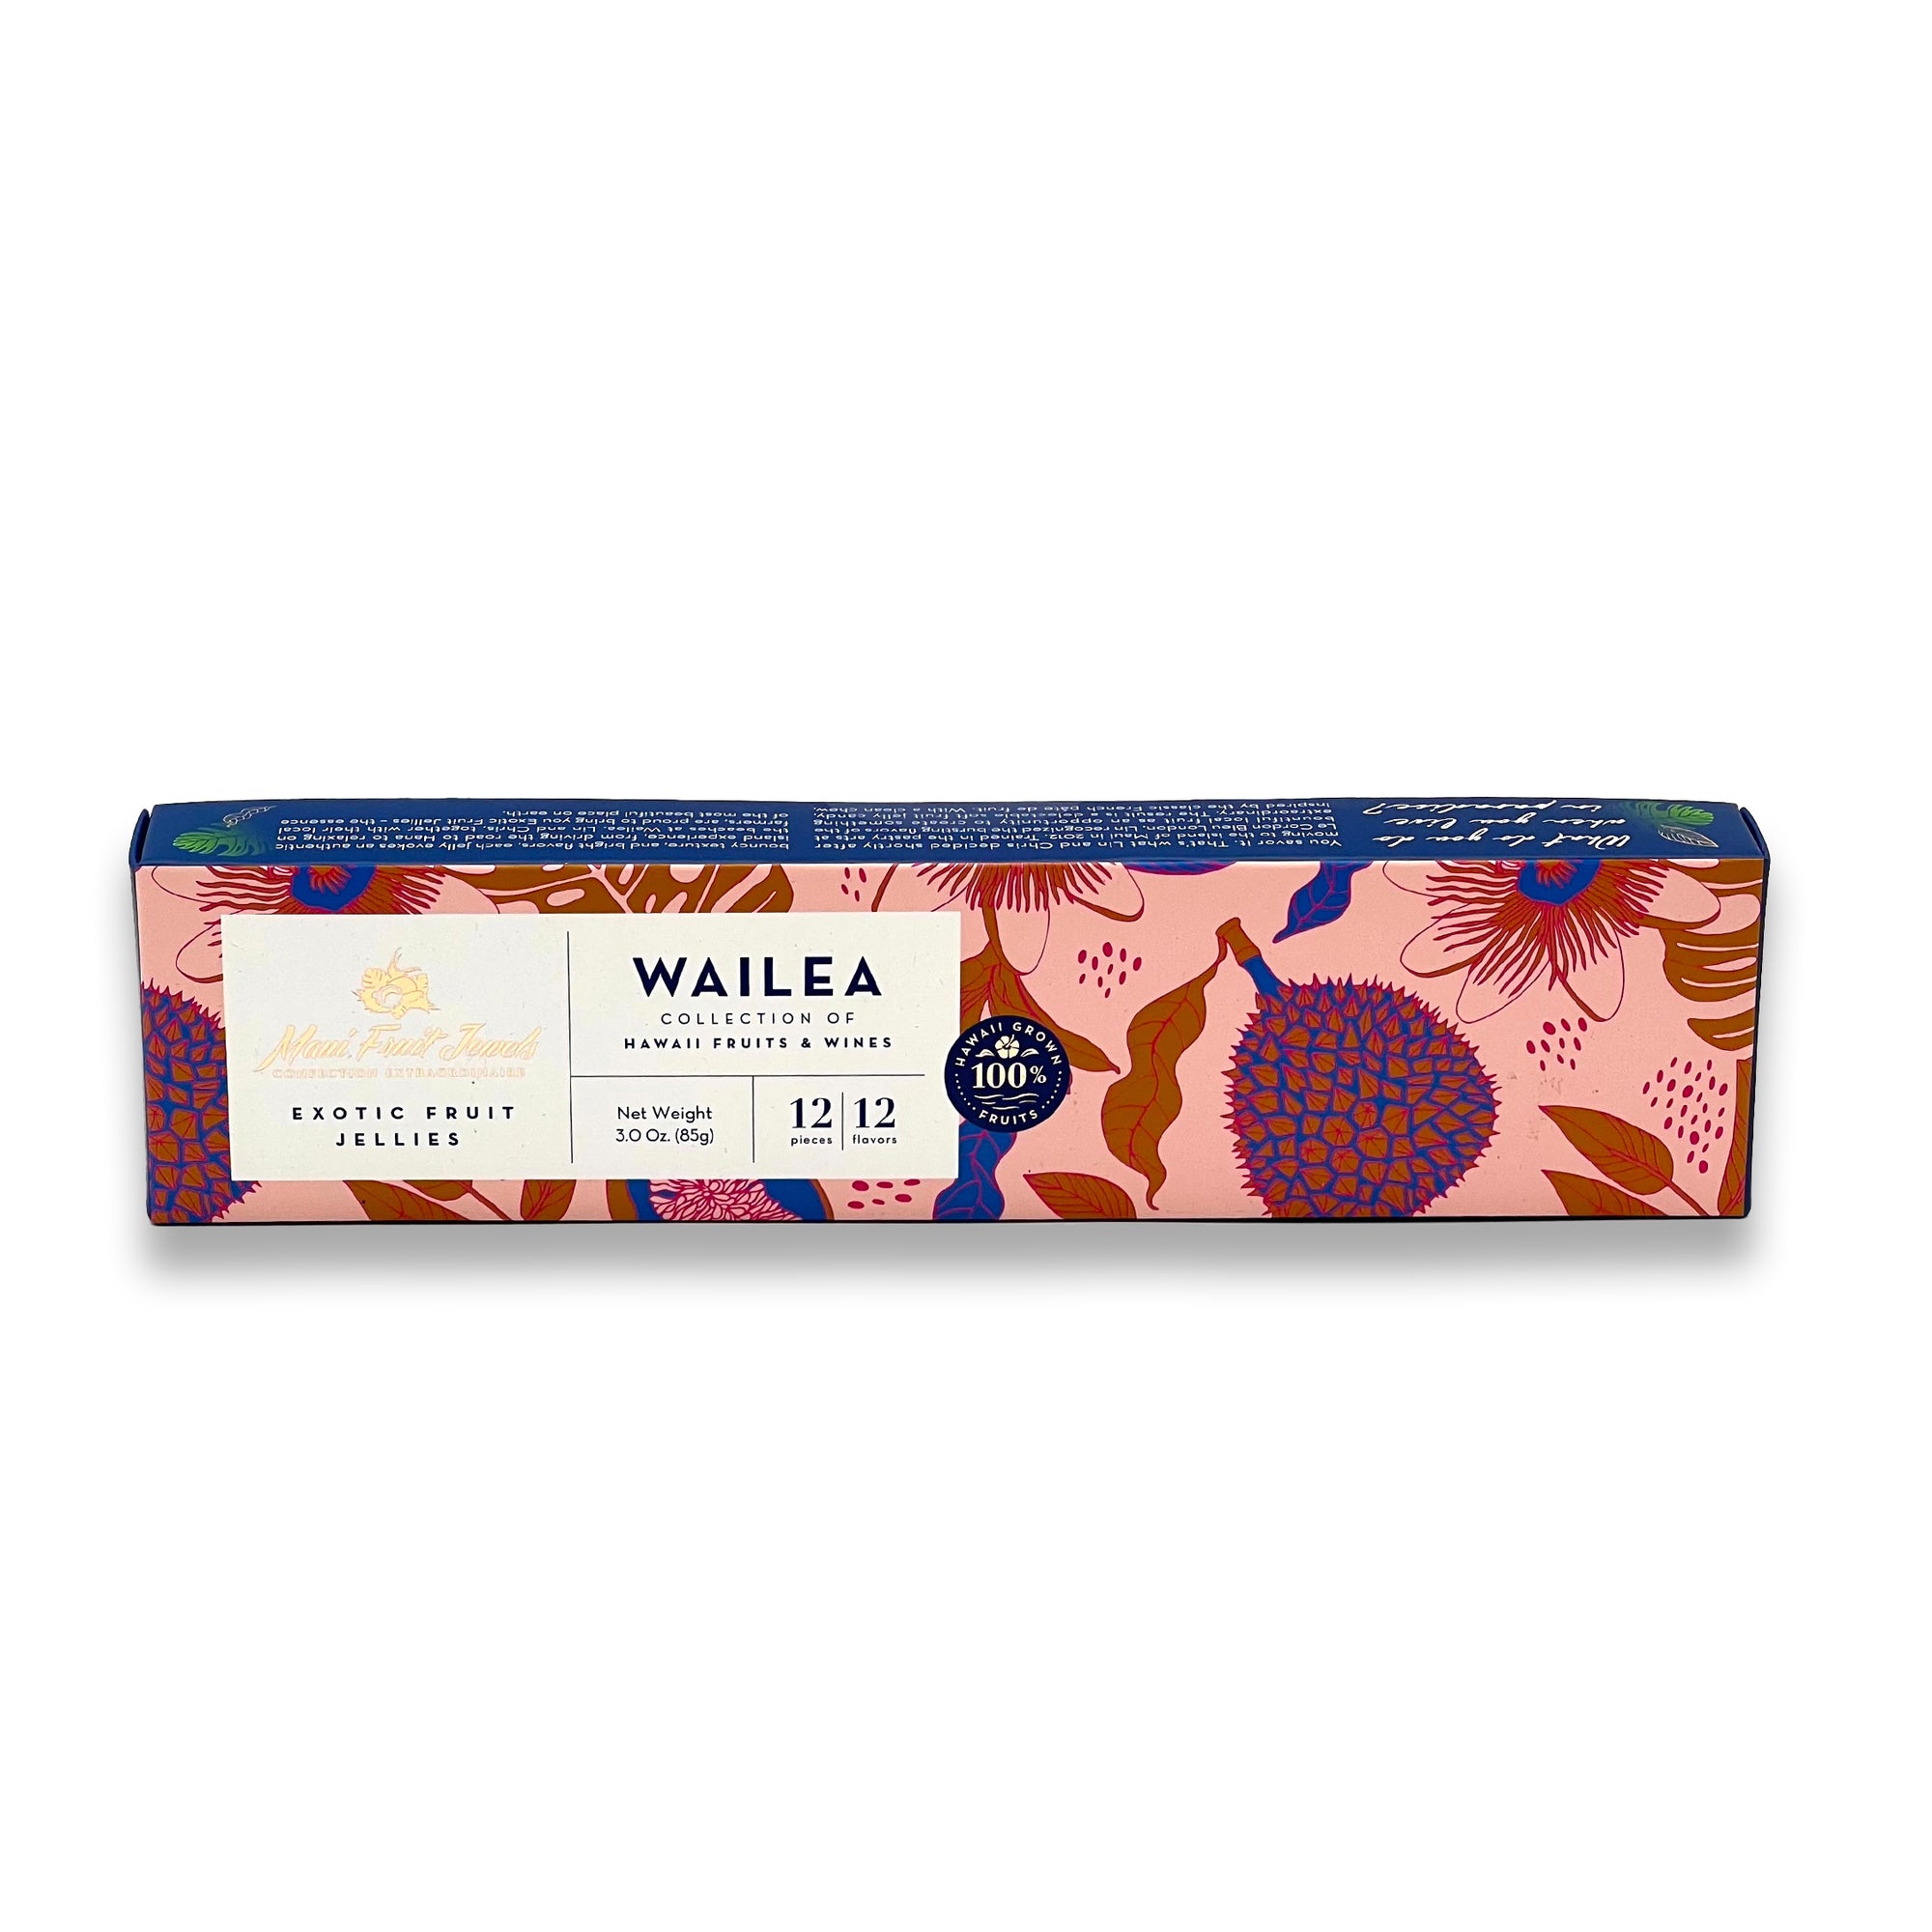 Pop-Up Mākeke - Maui Fruit Jewels - Exotic Fruit Jellies - Wailea (Fruit & Wines) - Closed Box